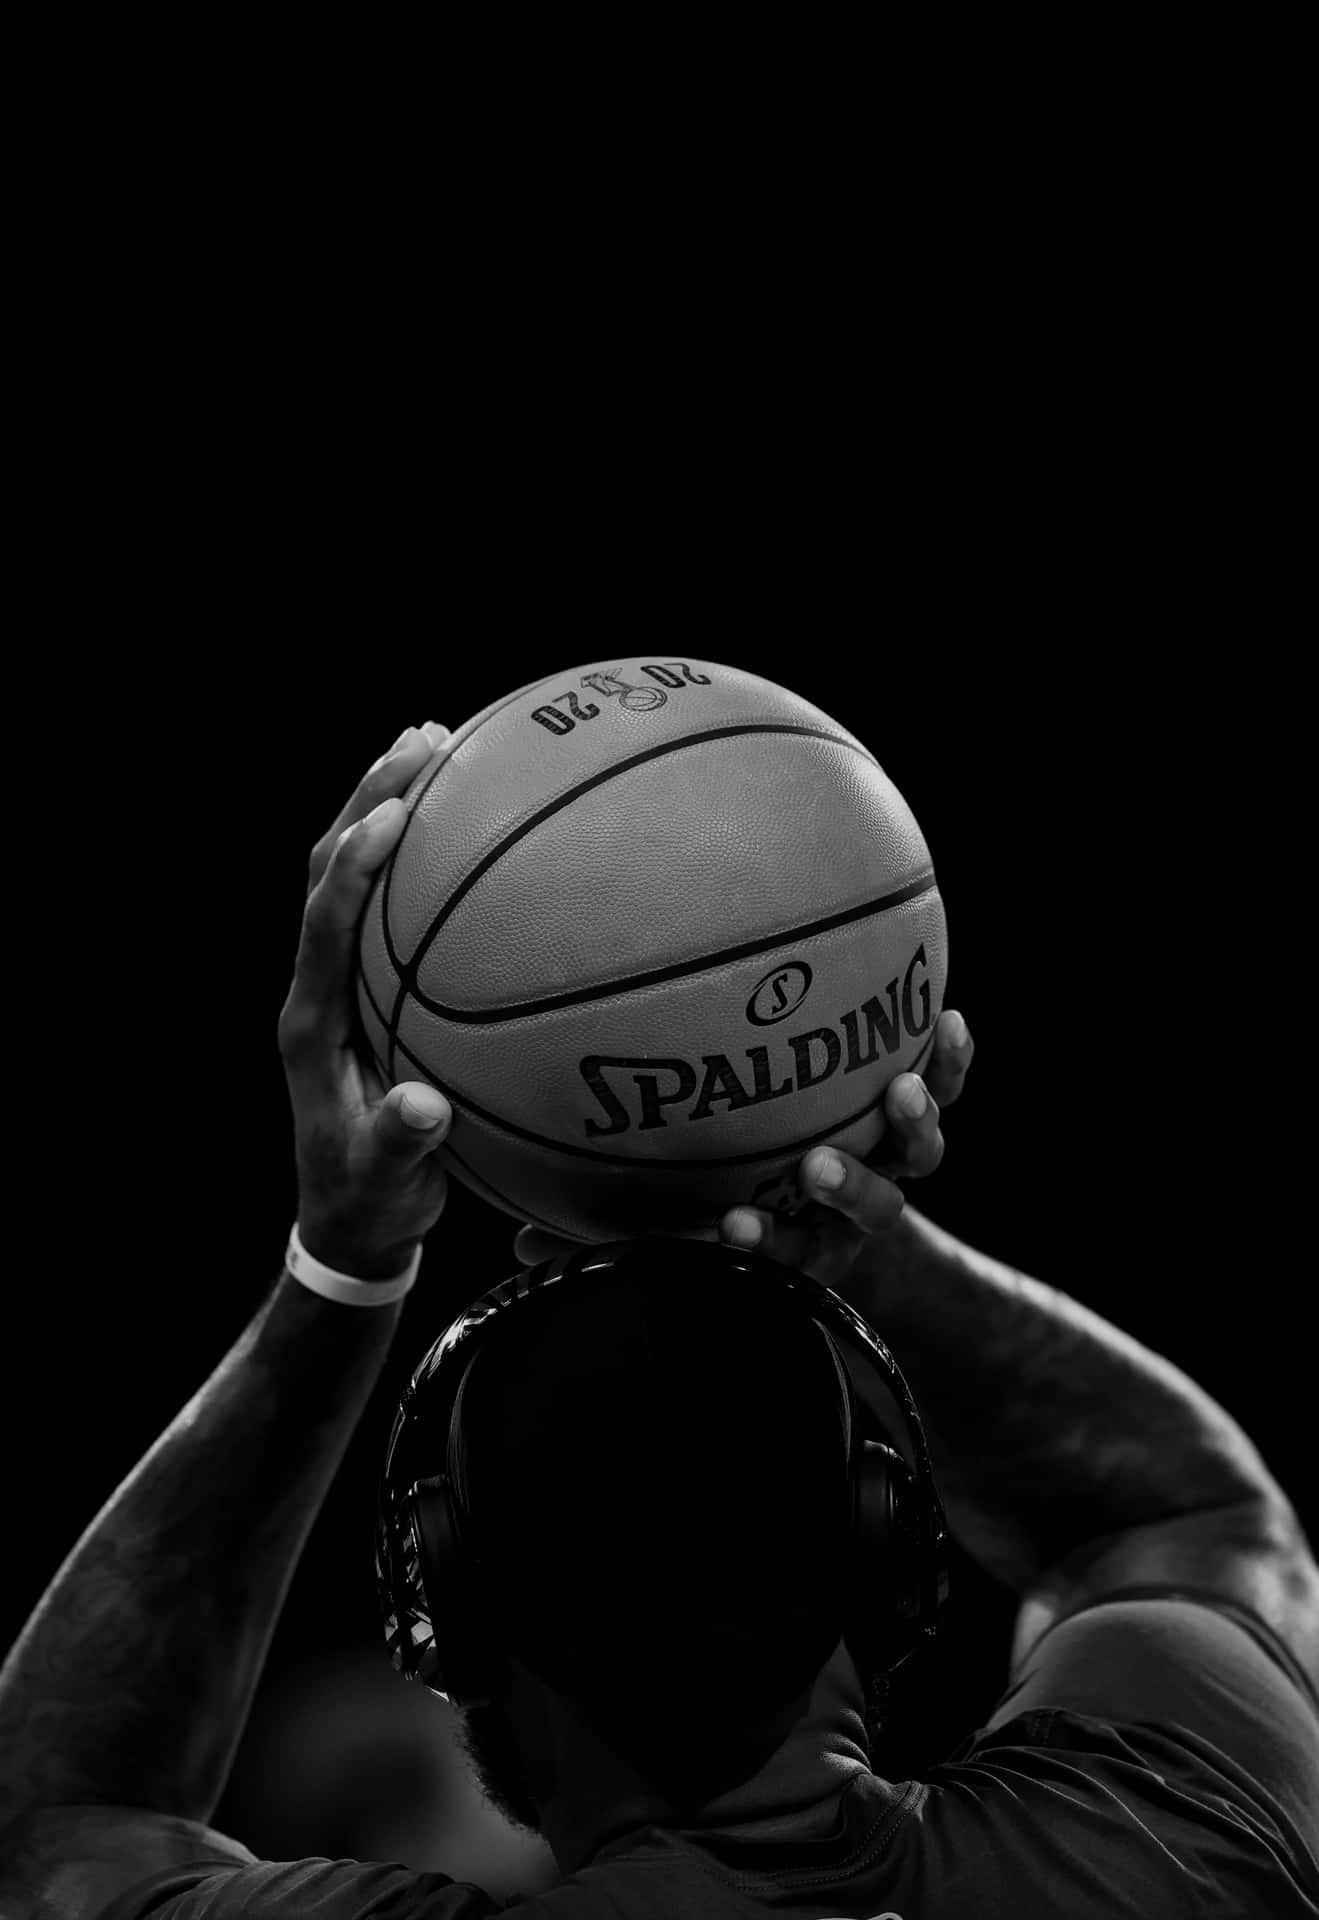 Basketball Black Background Images  Free Download on Freepik